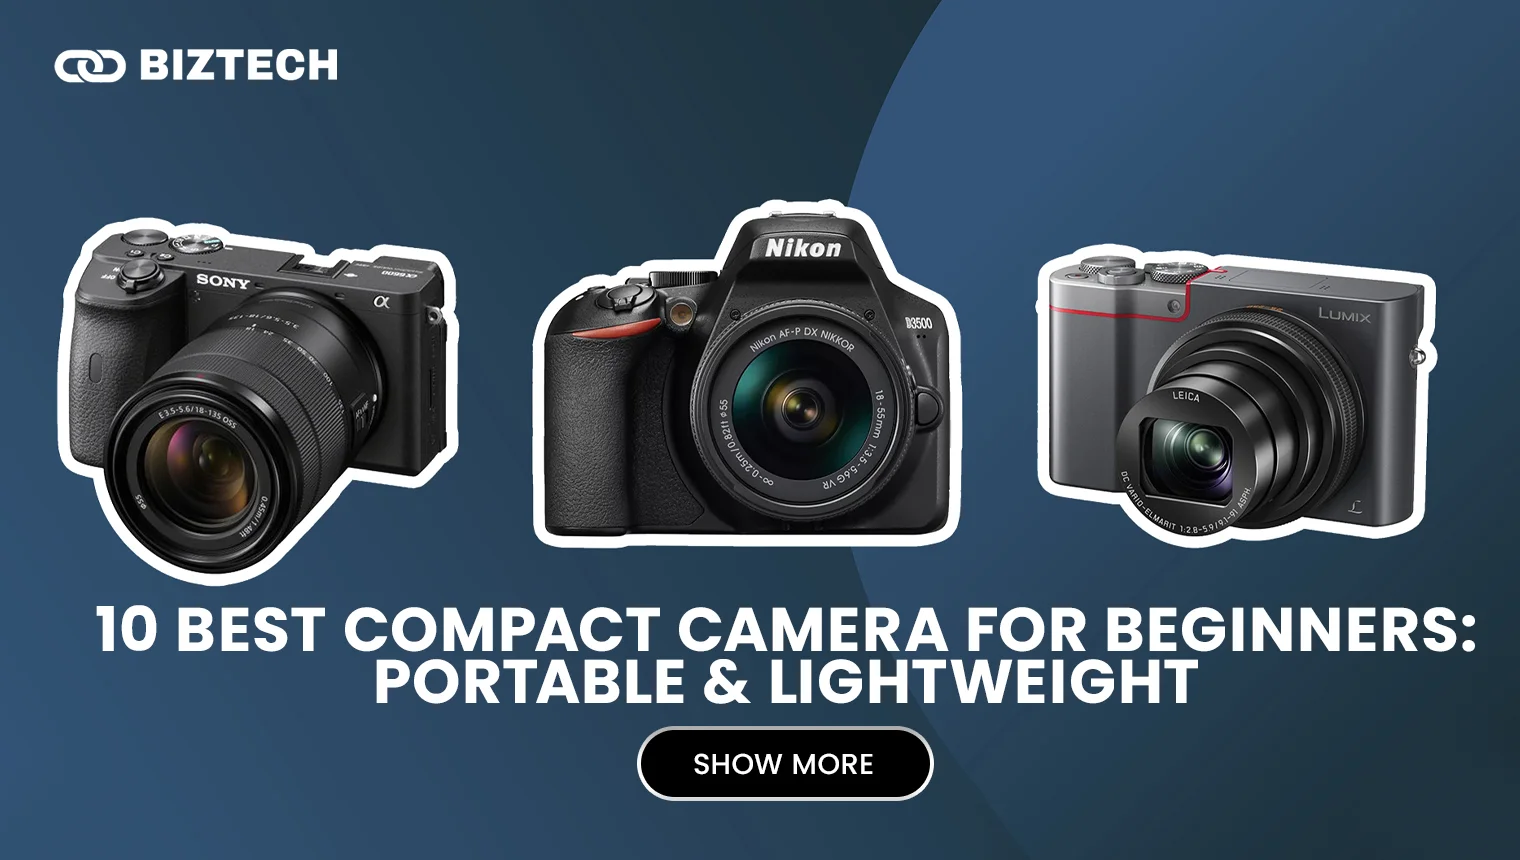 10 Best Compact Cameras for Beginners: Portable & Lightweight